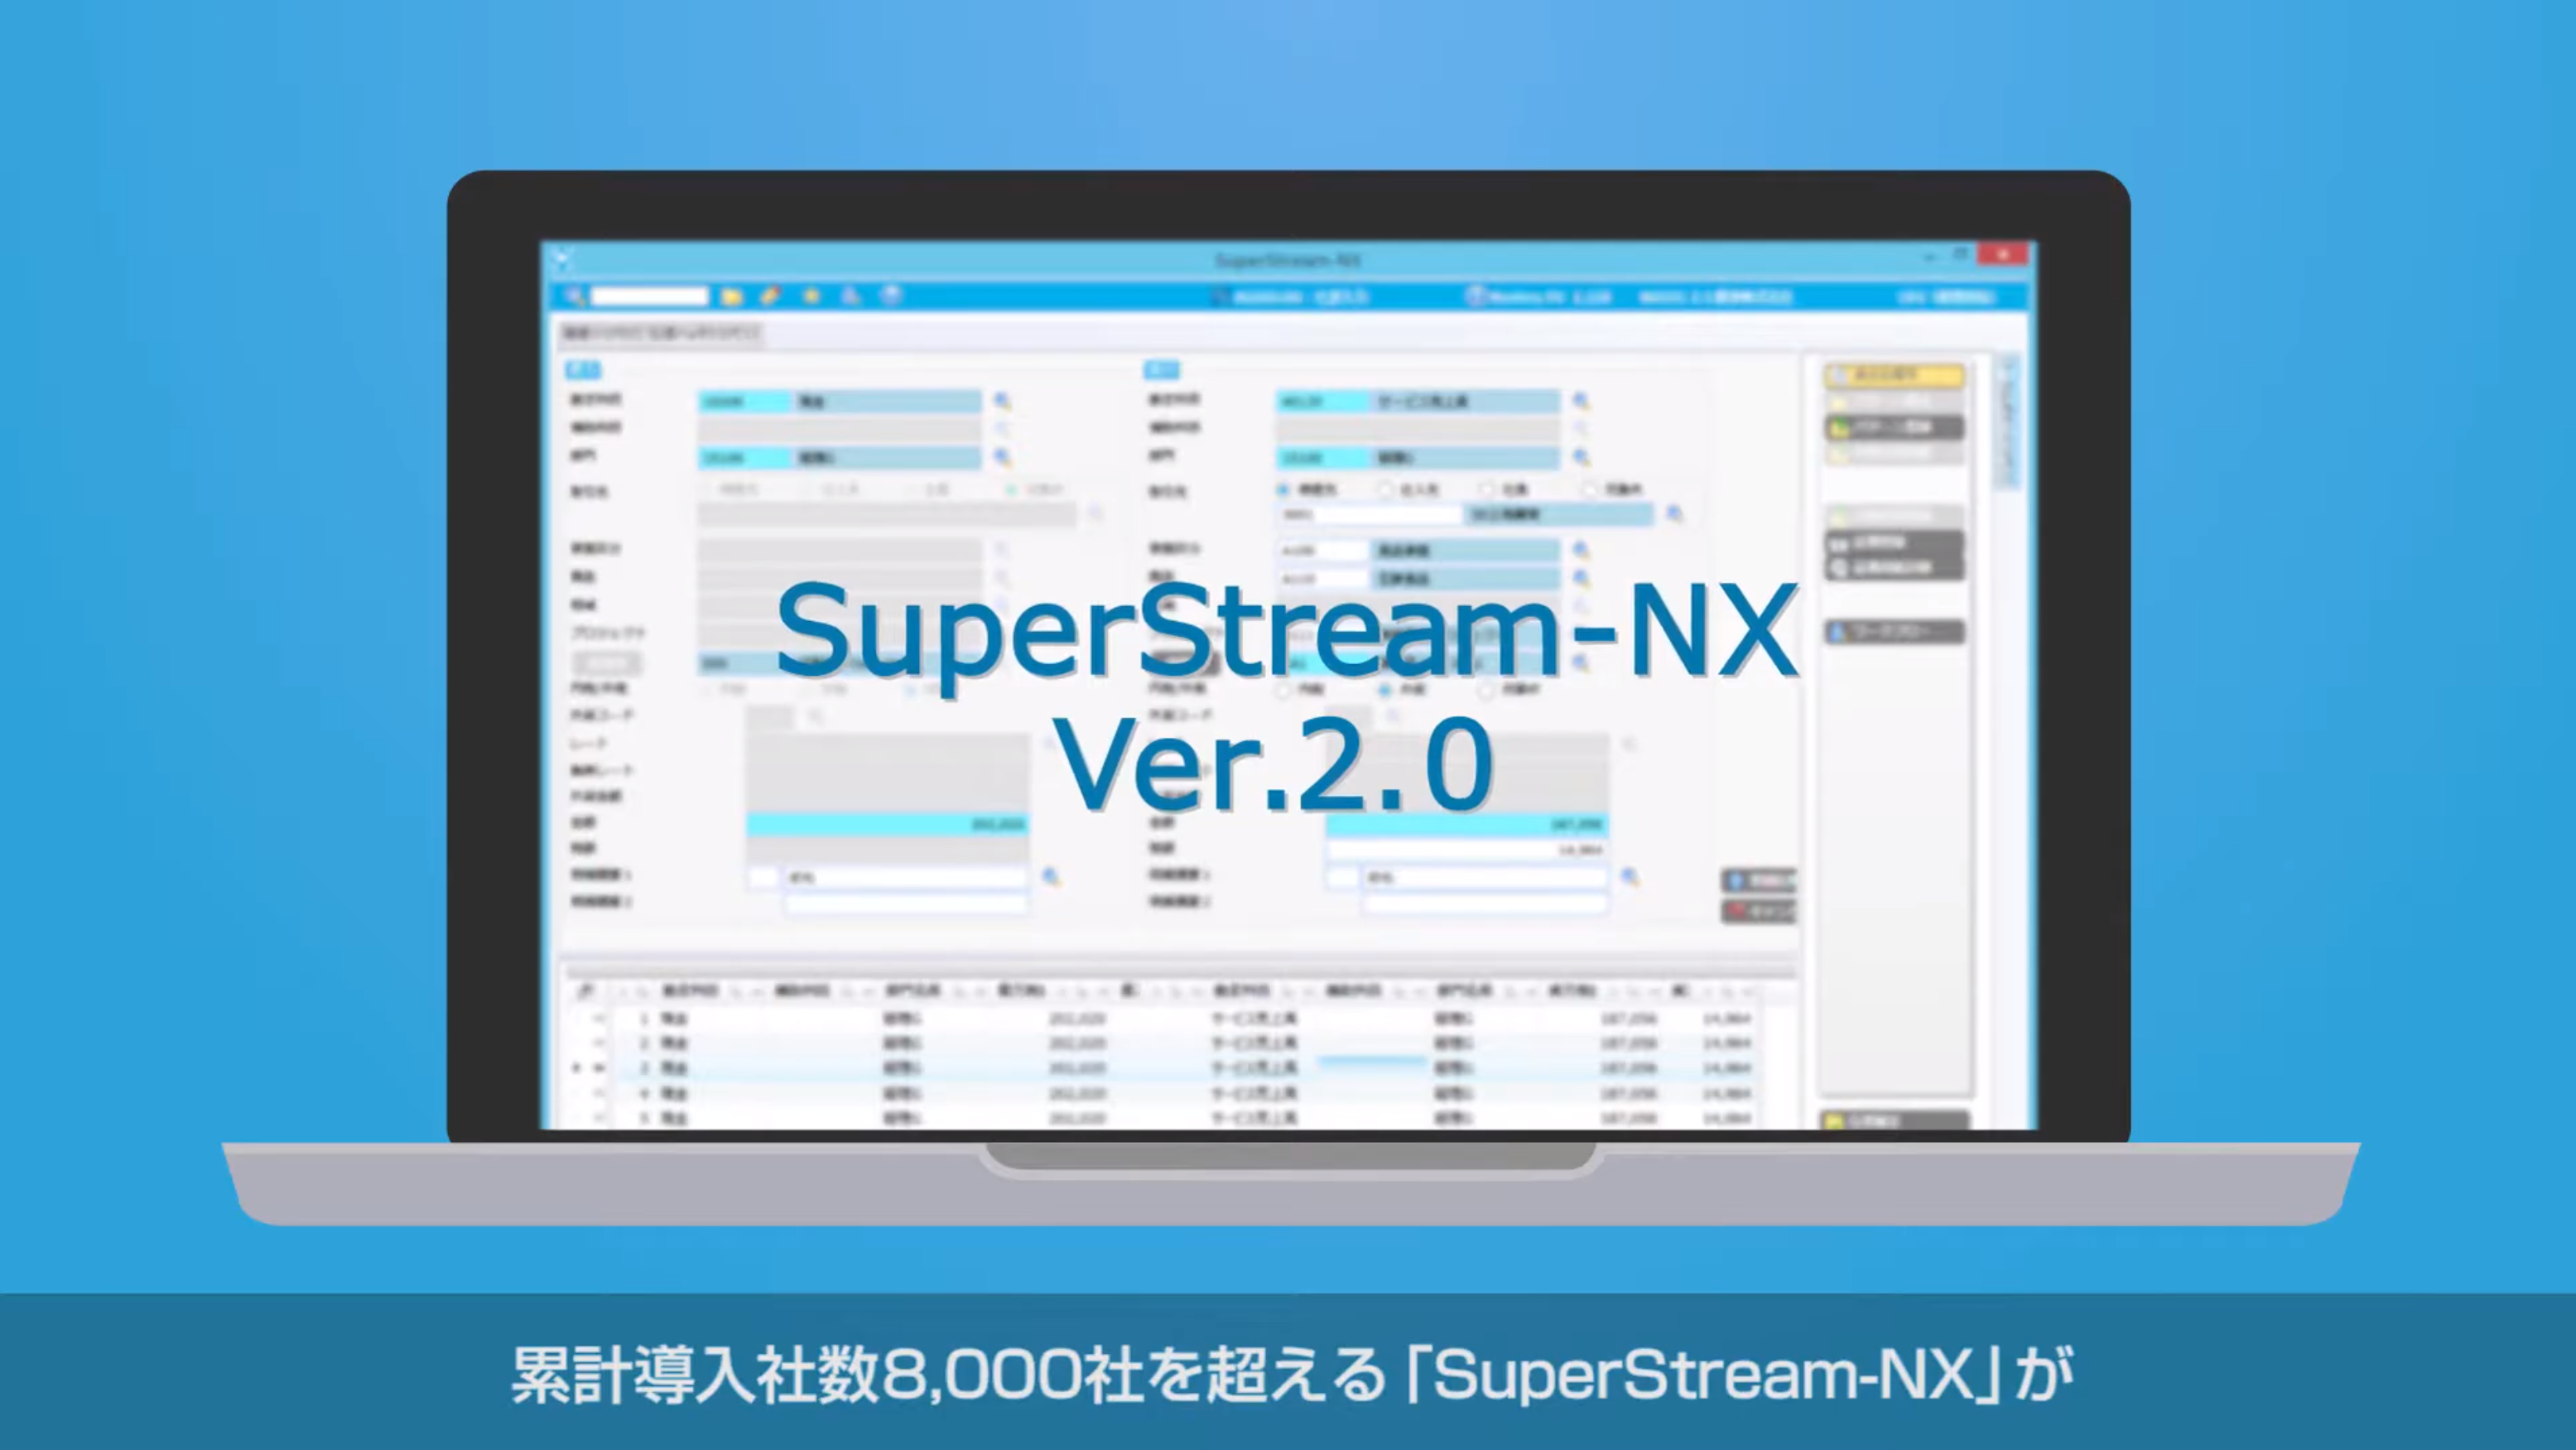 SuperStream-NX Ver.2.0の特長をご紹介します